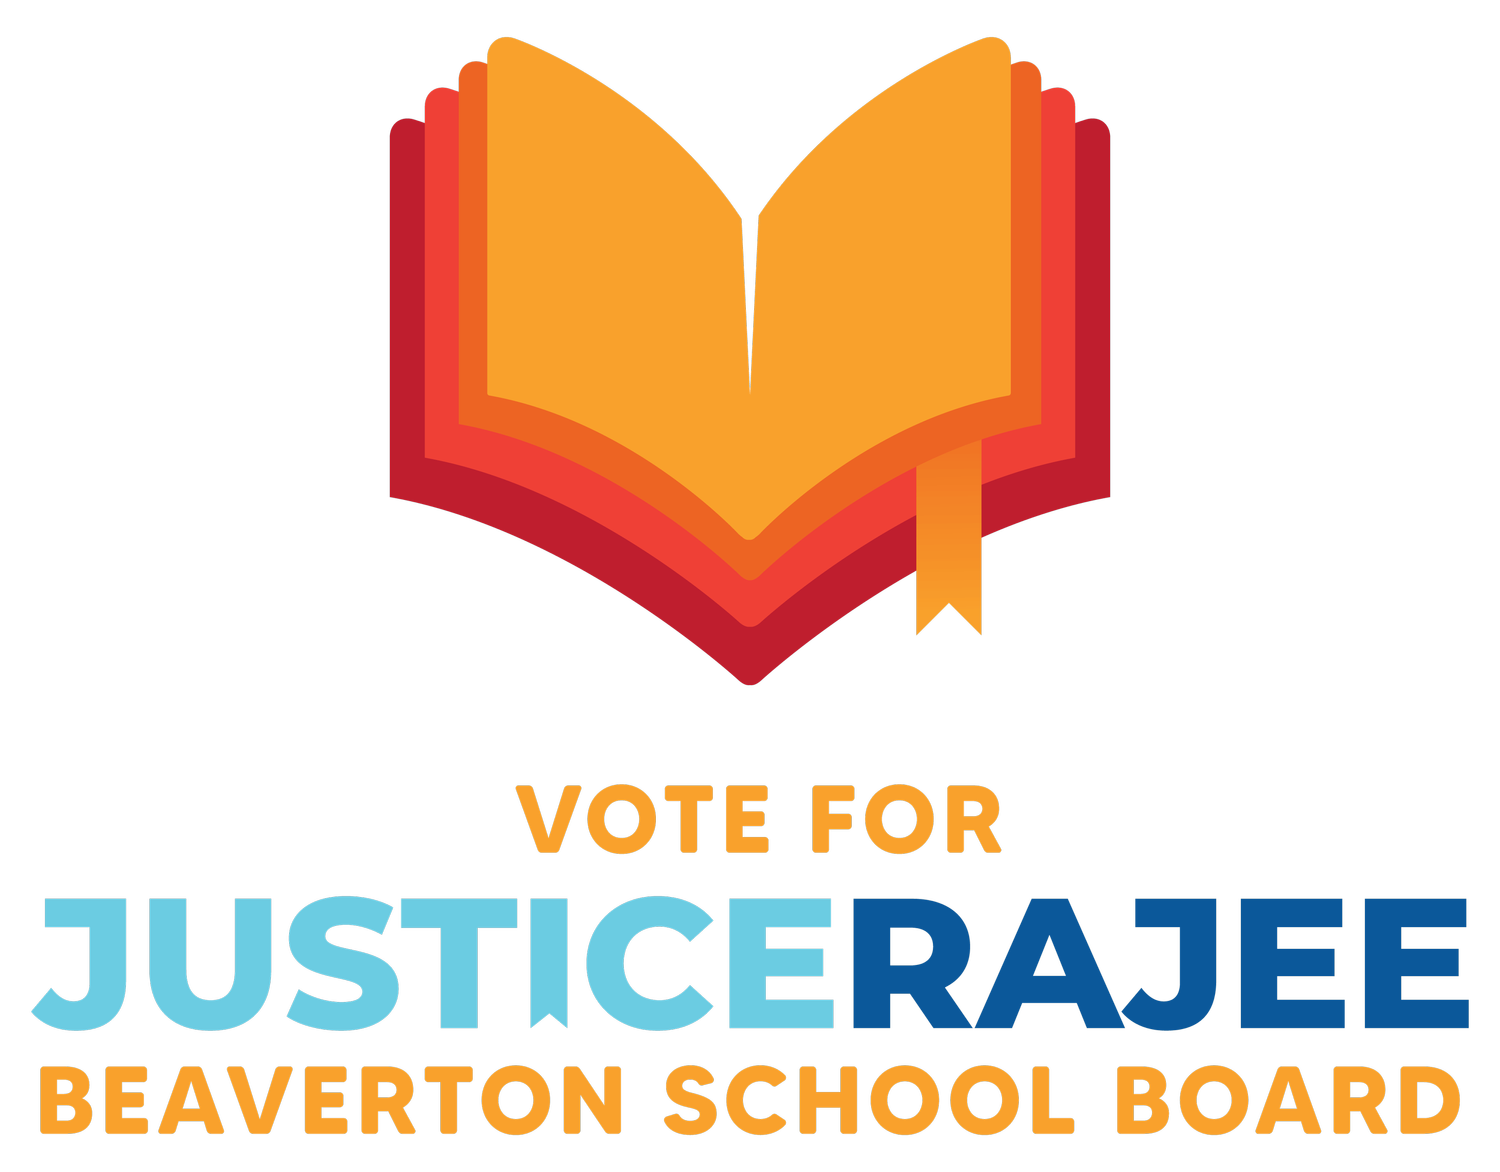 Justice Rajee for Beaverton School